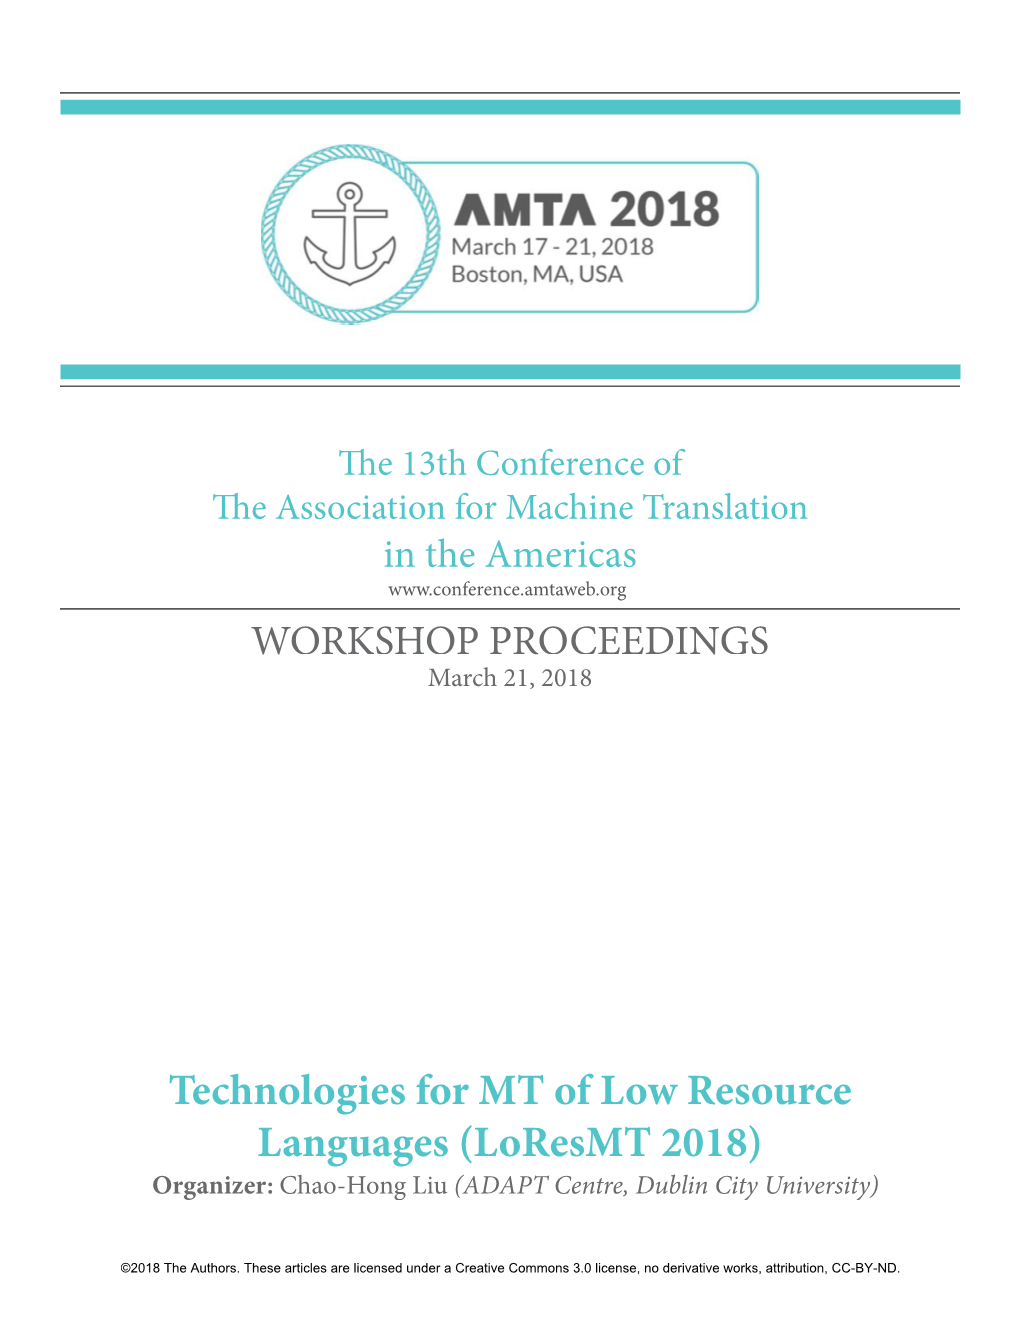 Technologies for MT of Low Resource Languages (Loresmt 2018) Organizer: Chao-Hong Liu (ADAPT Centre, Dublin City University)